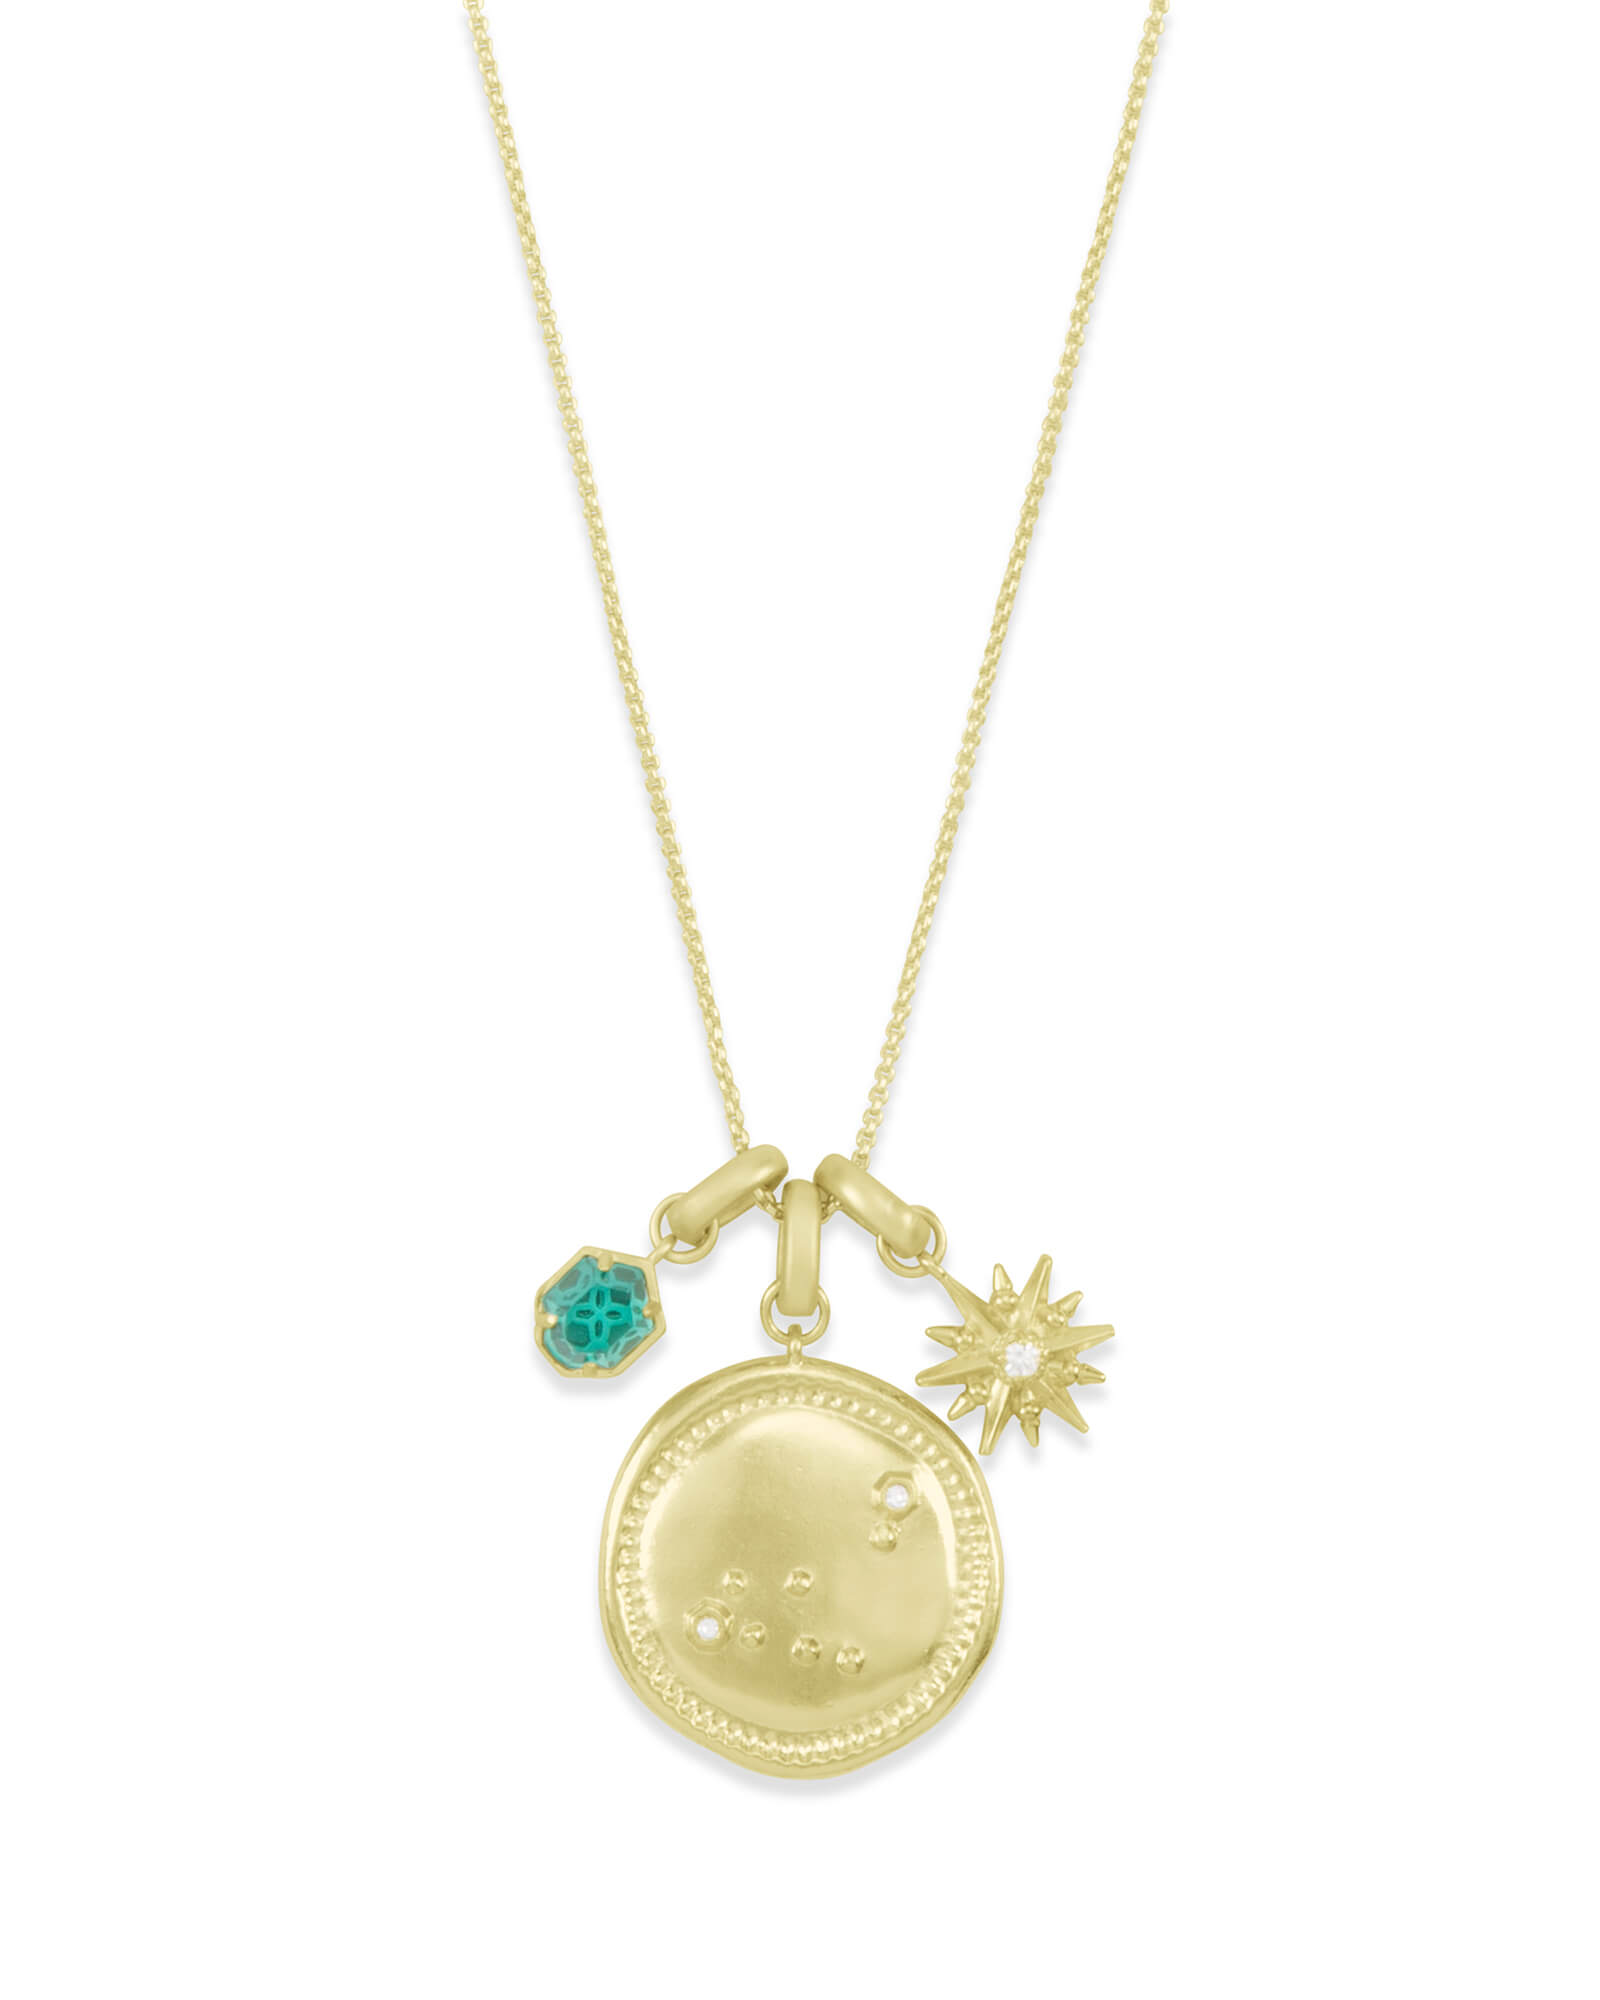 December Capricorn Charm Necklace Set in Gold | Kendra Scott